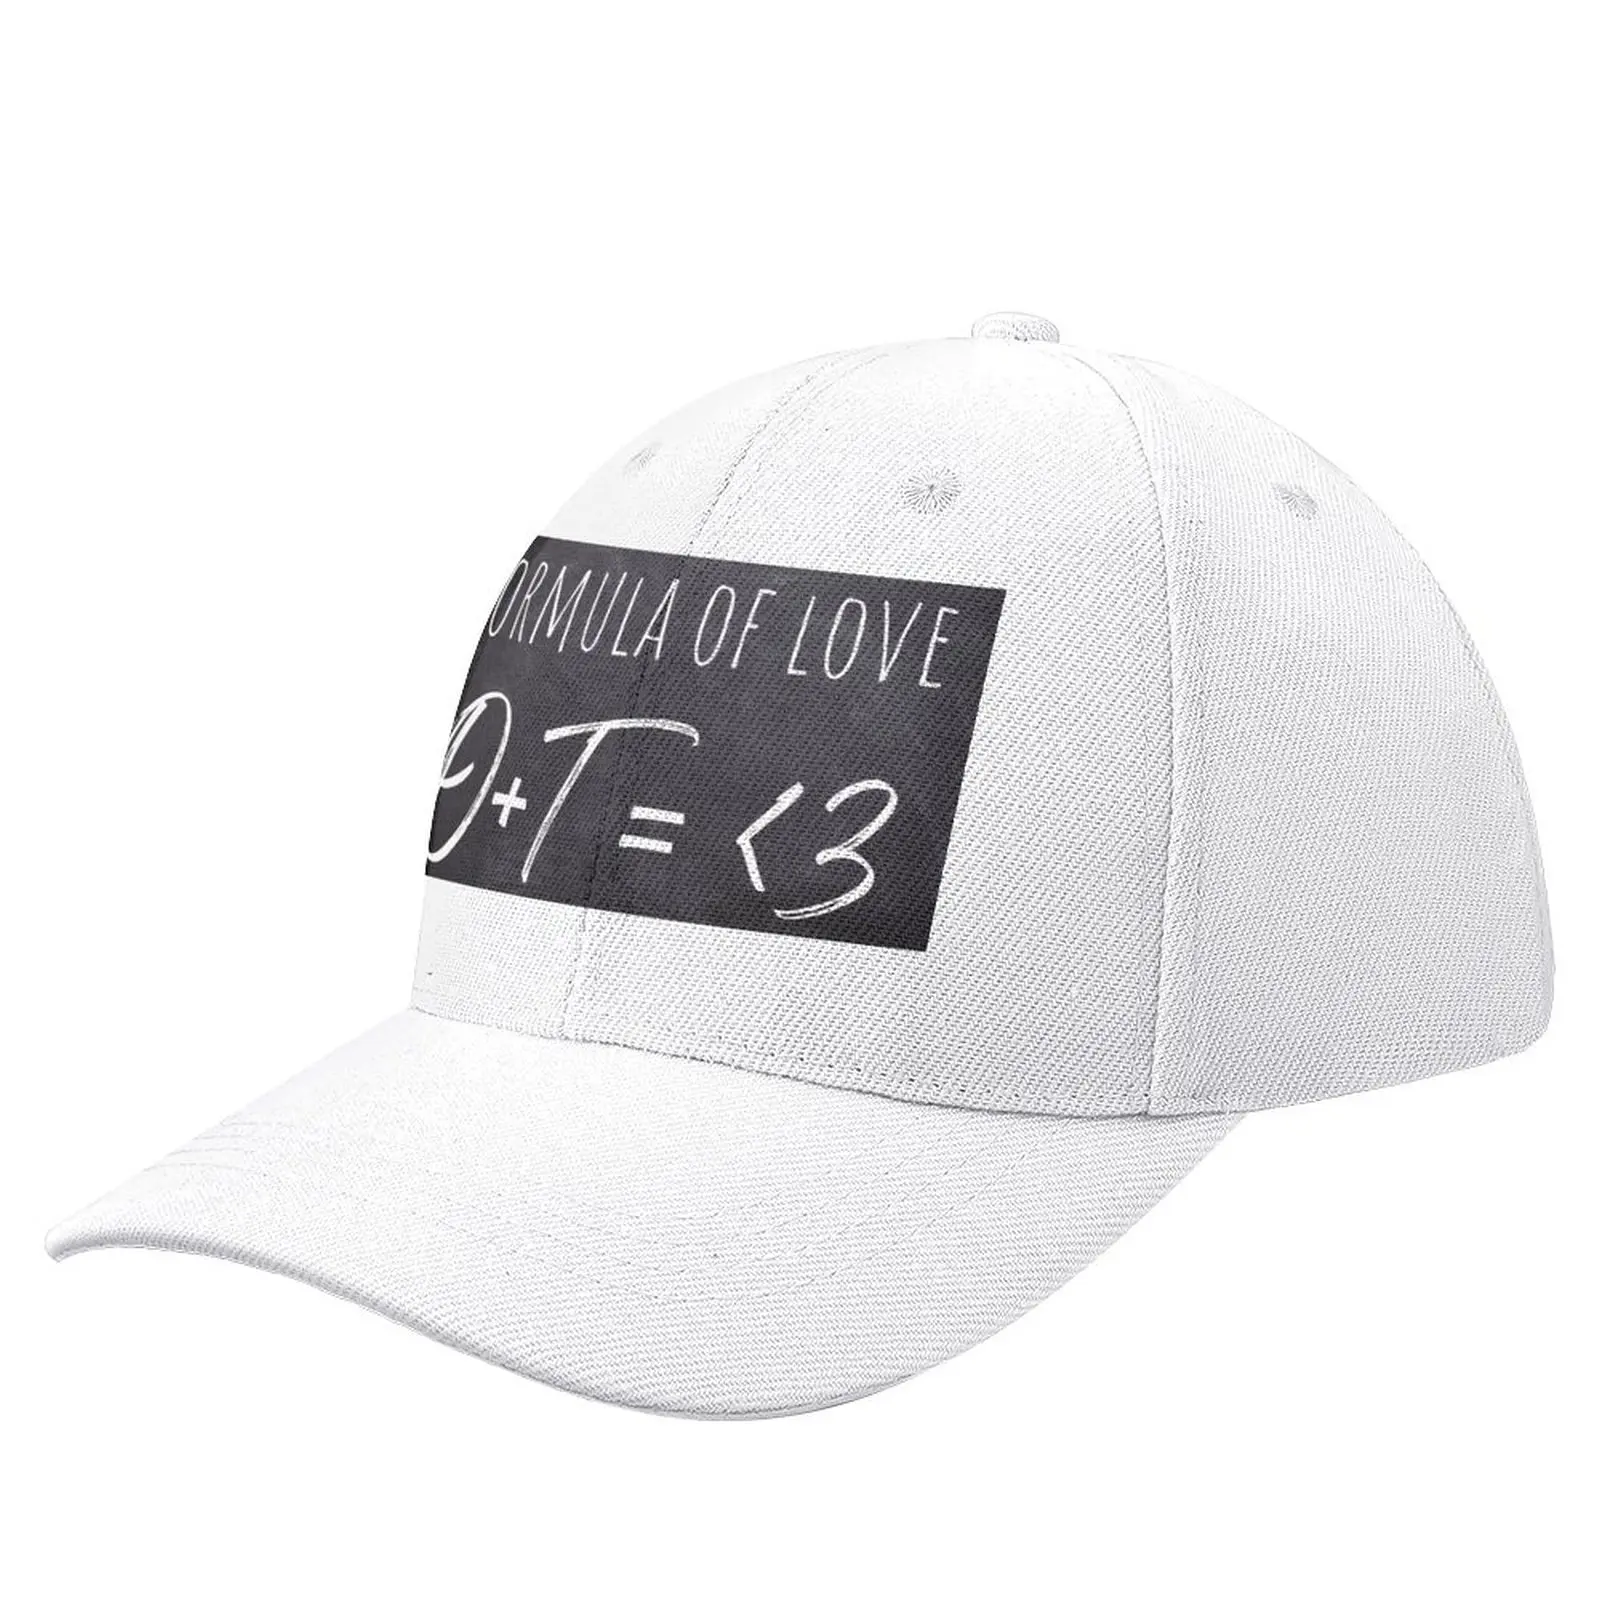 

Formula of Love O+T=<3 (white shirt) Baseball Cap Icon cute Women's Golf Wear Men's